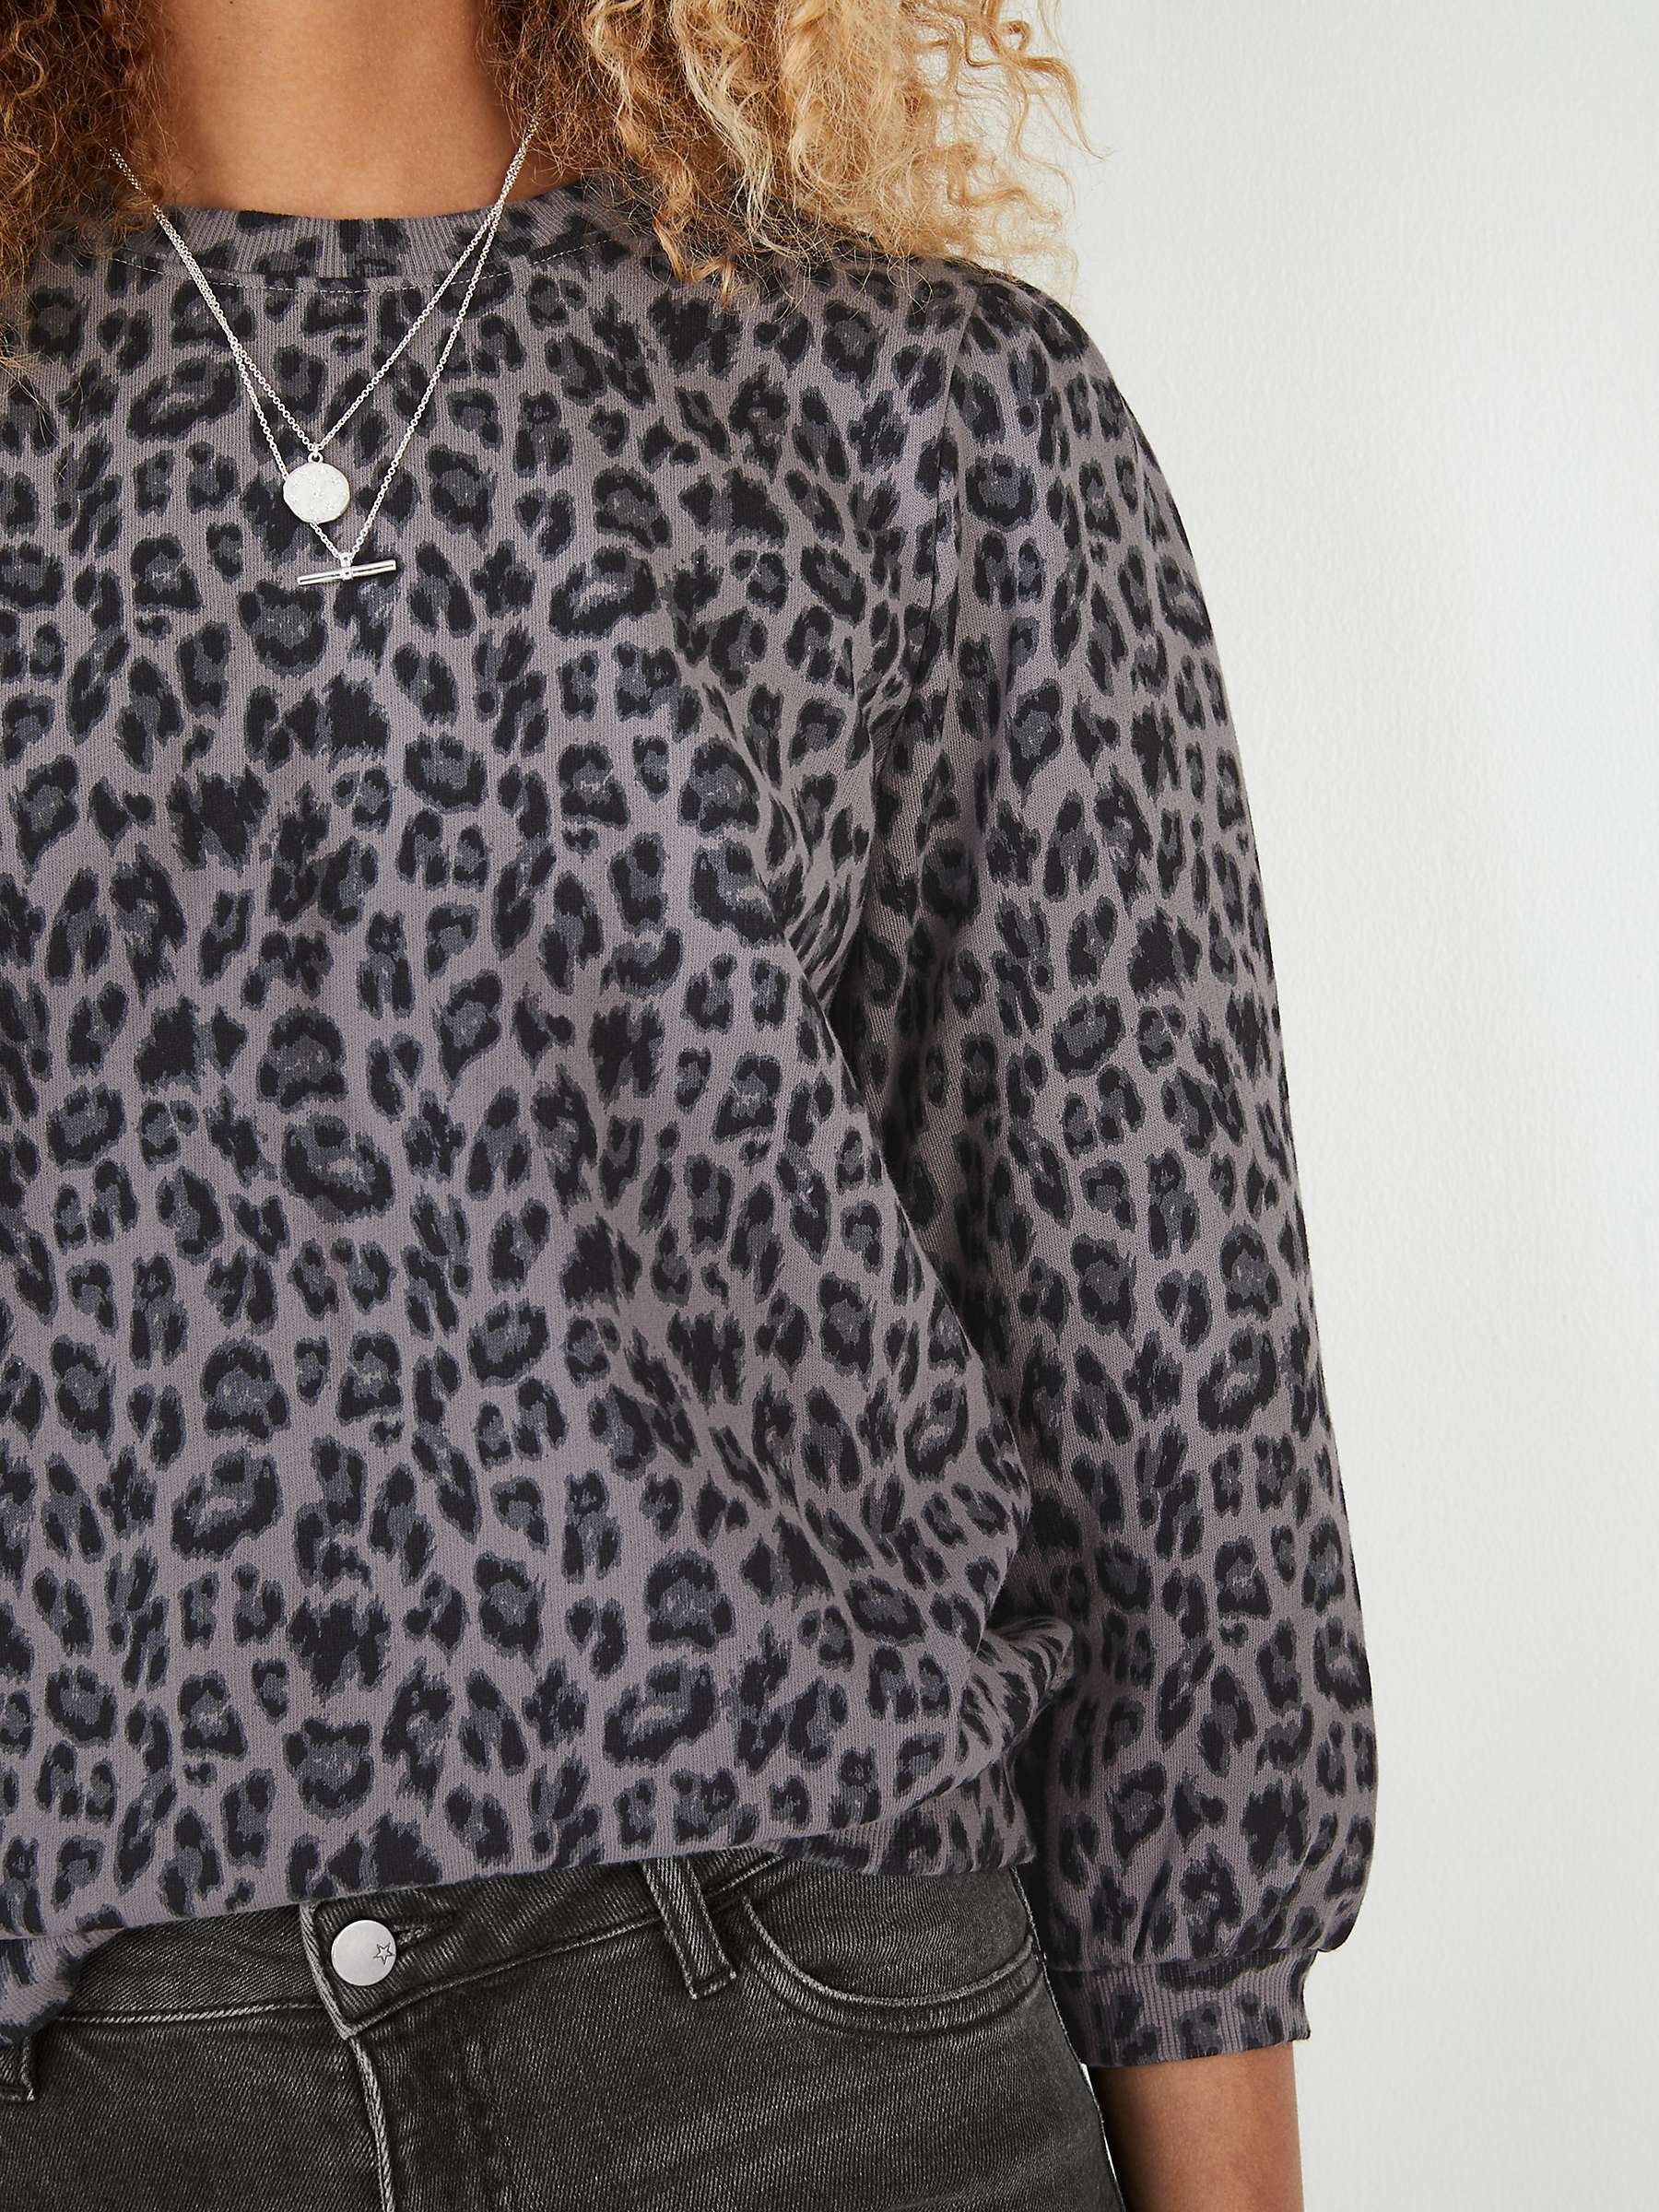 Hush beautiful leopard sweatshirt by Hush size s 